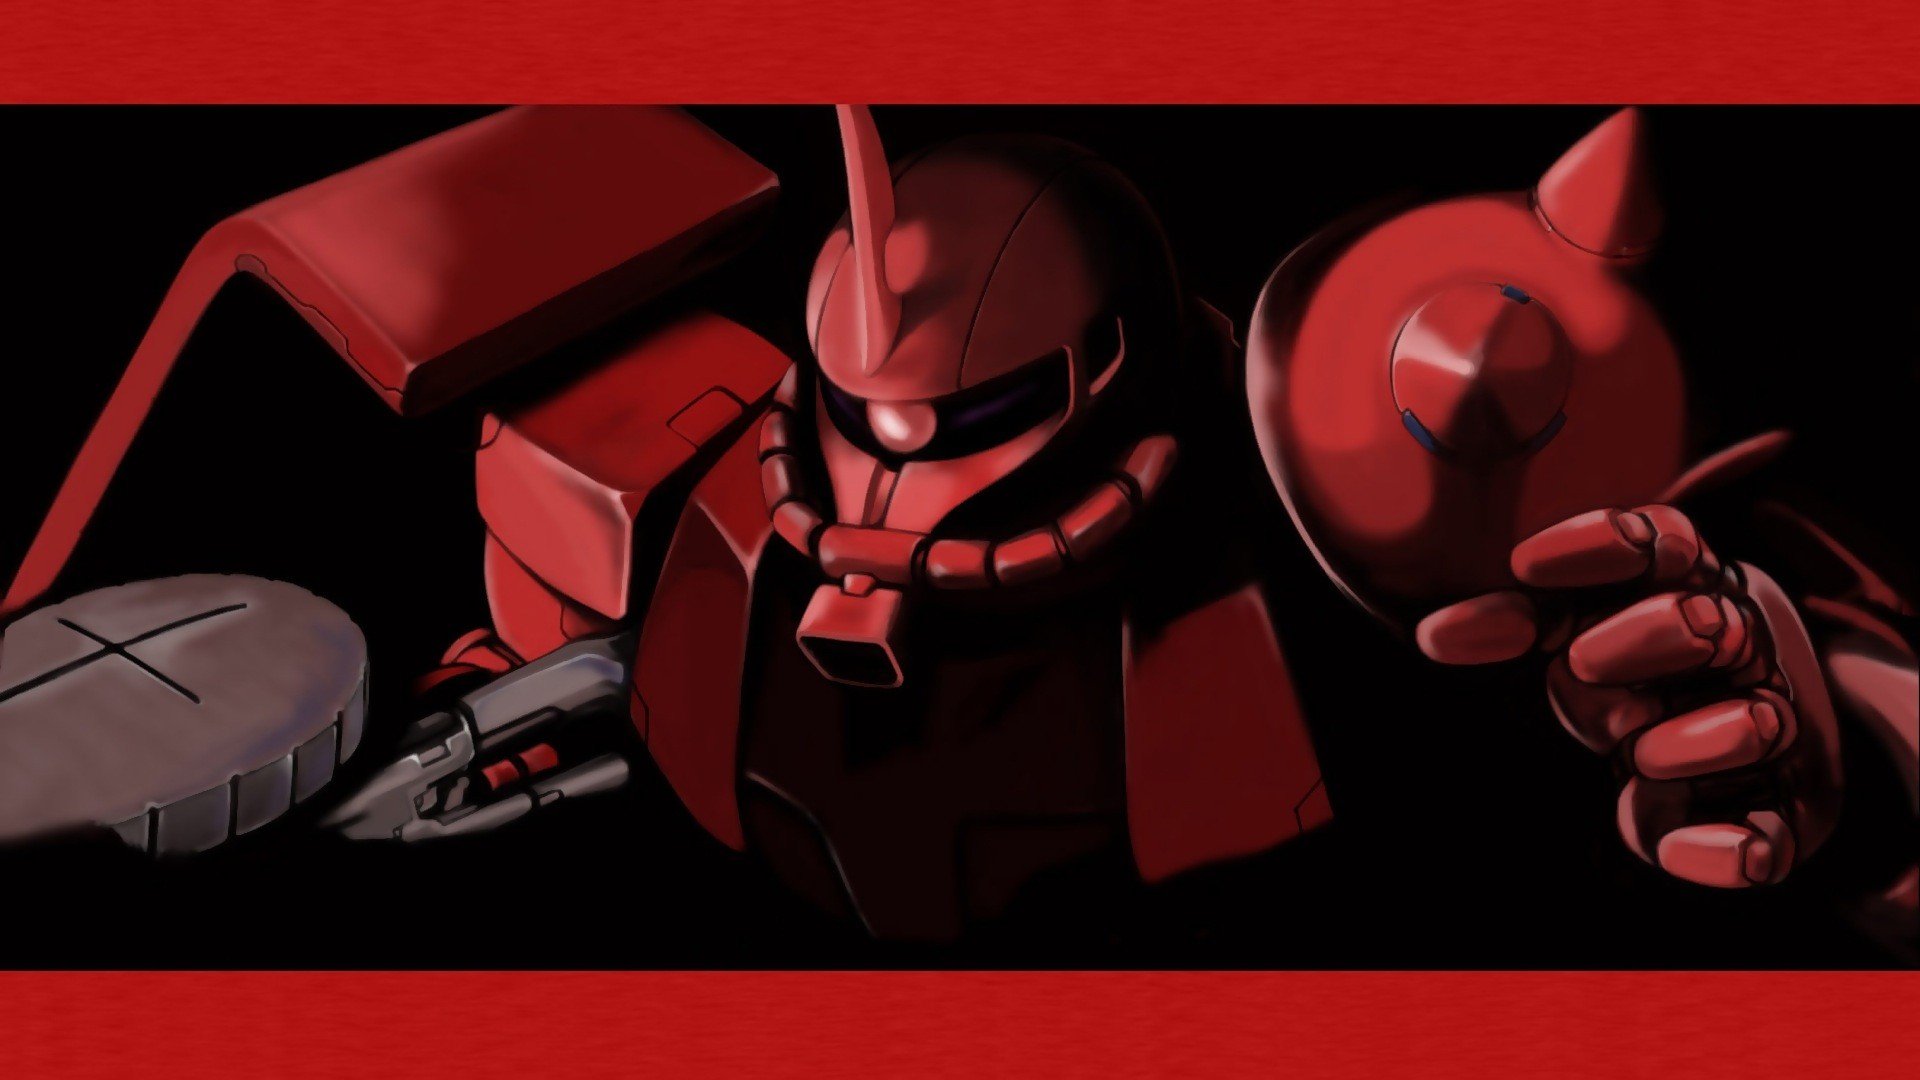 Mobile Suit Mobile Suit Gundam Zaku Ii Hd Wallpapers Desktop Images, Photos, Reviews